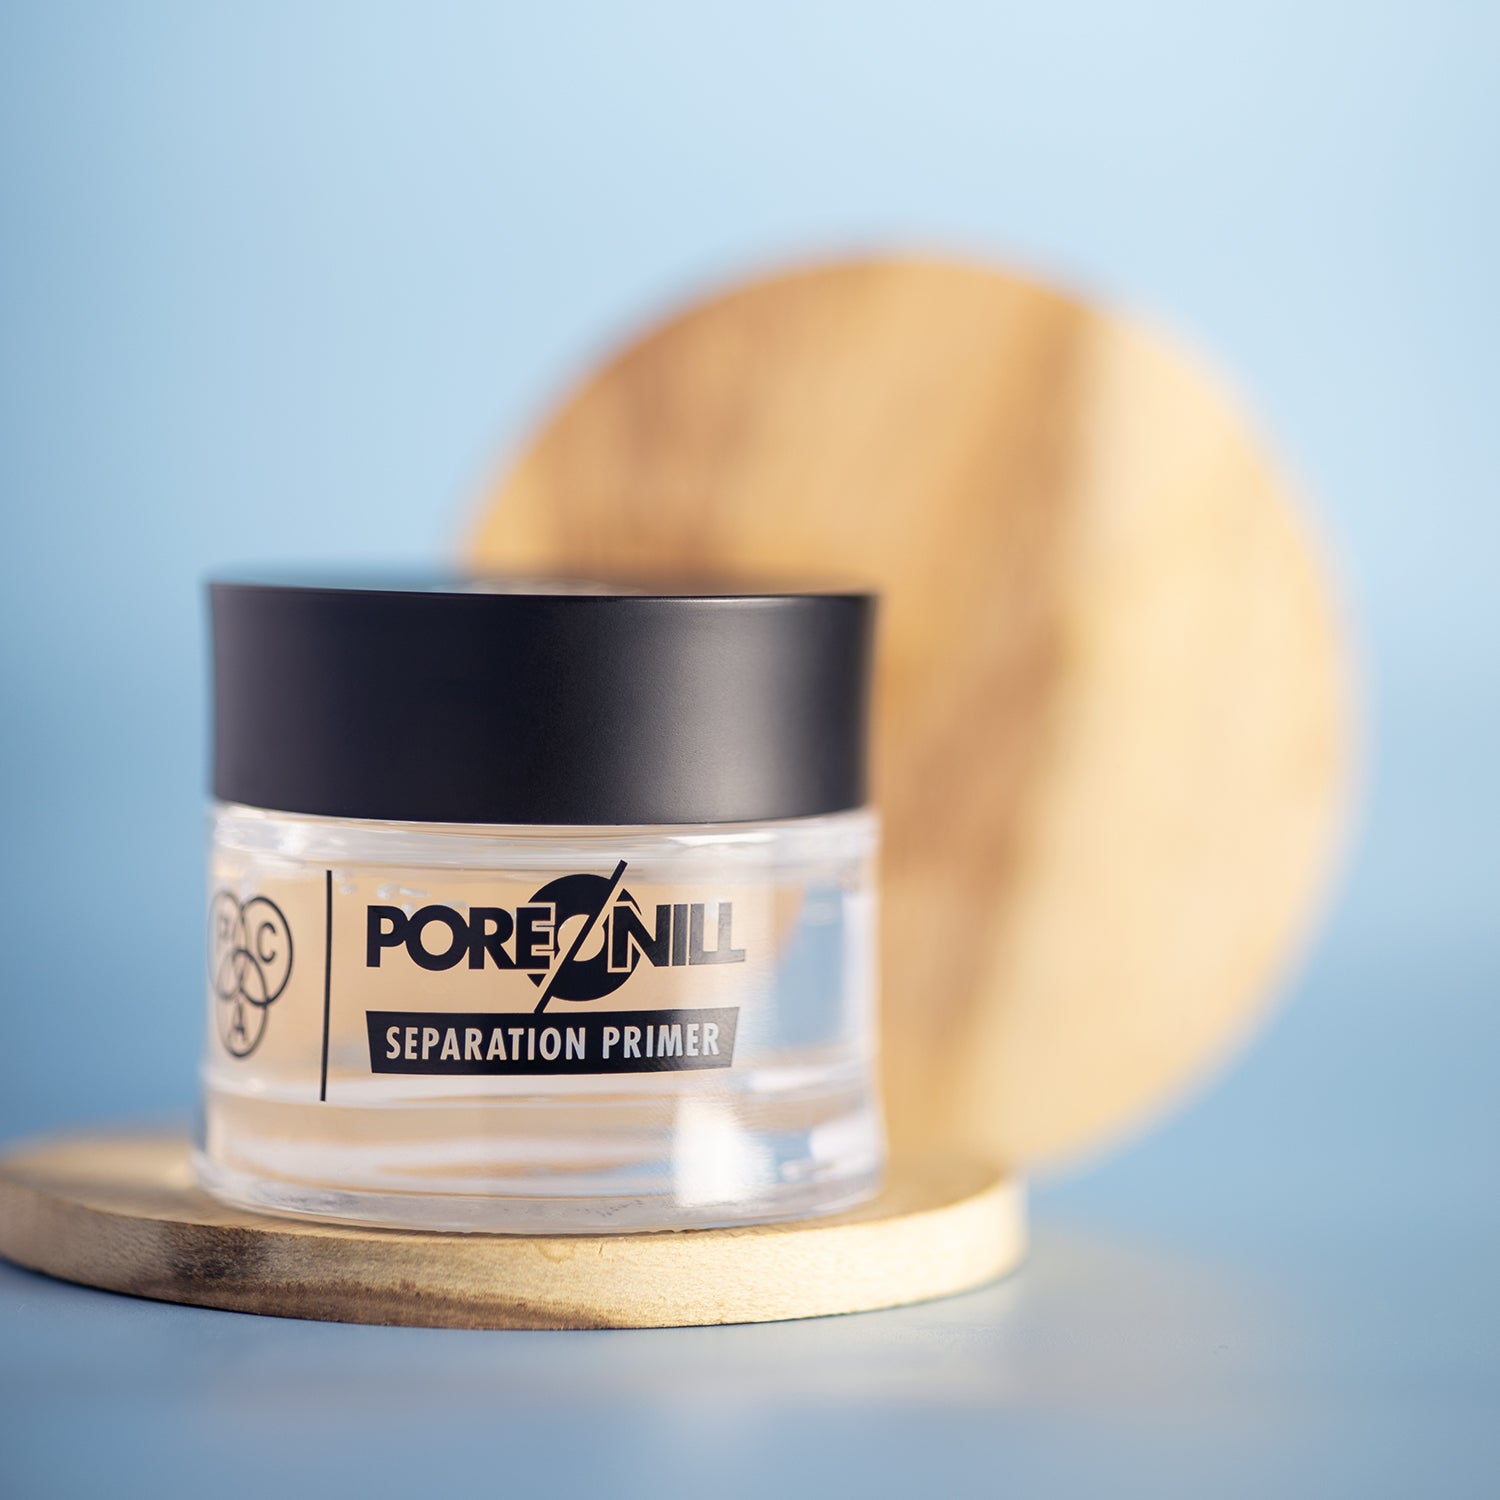 PAC Cosmetics Pore-O-Nill Separation Primer (35 gm) (Gel Based)